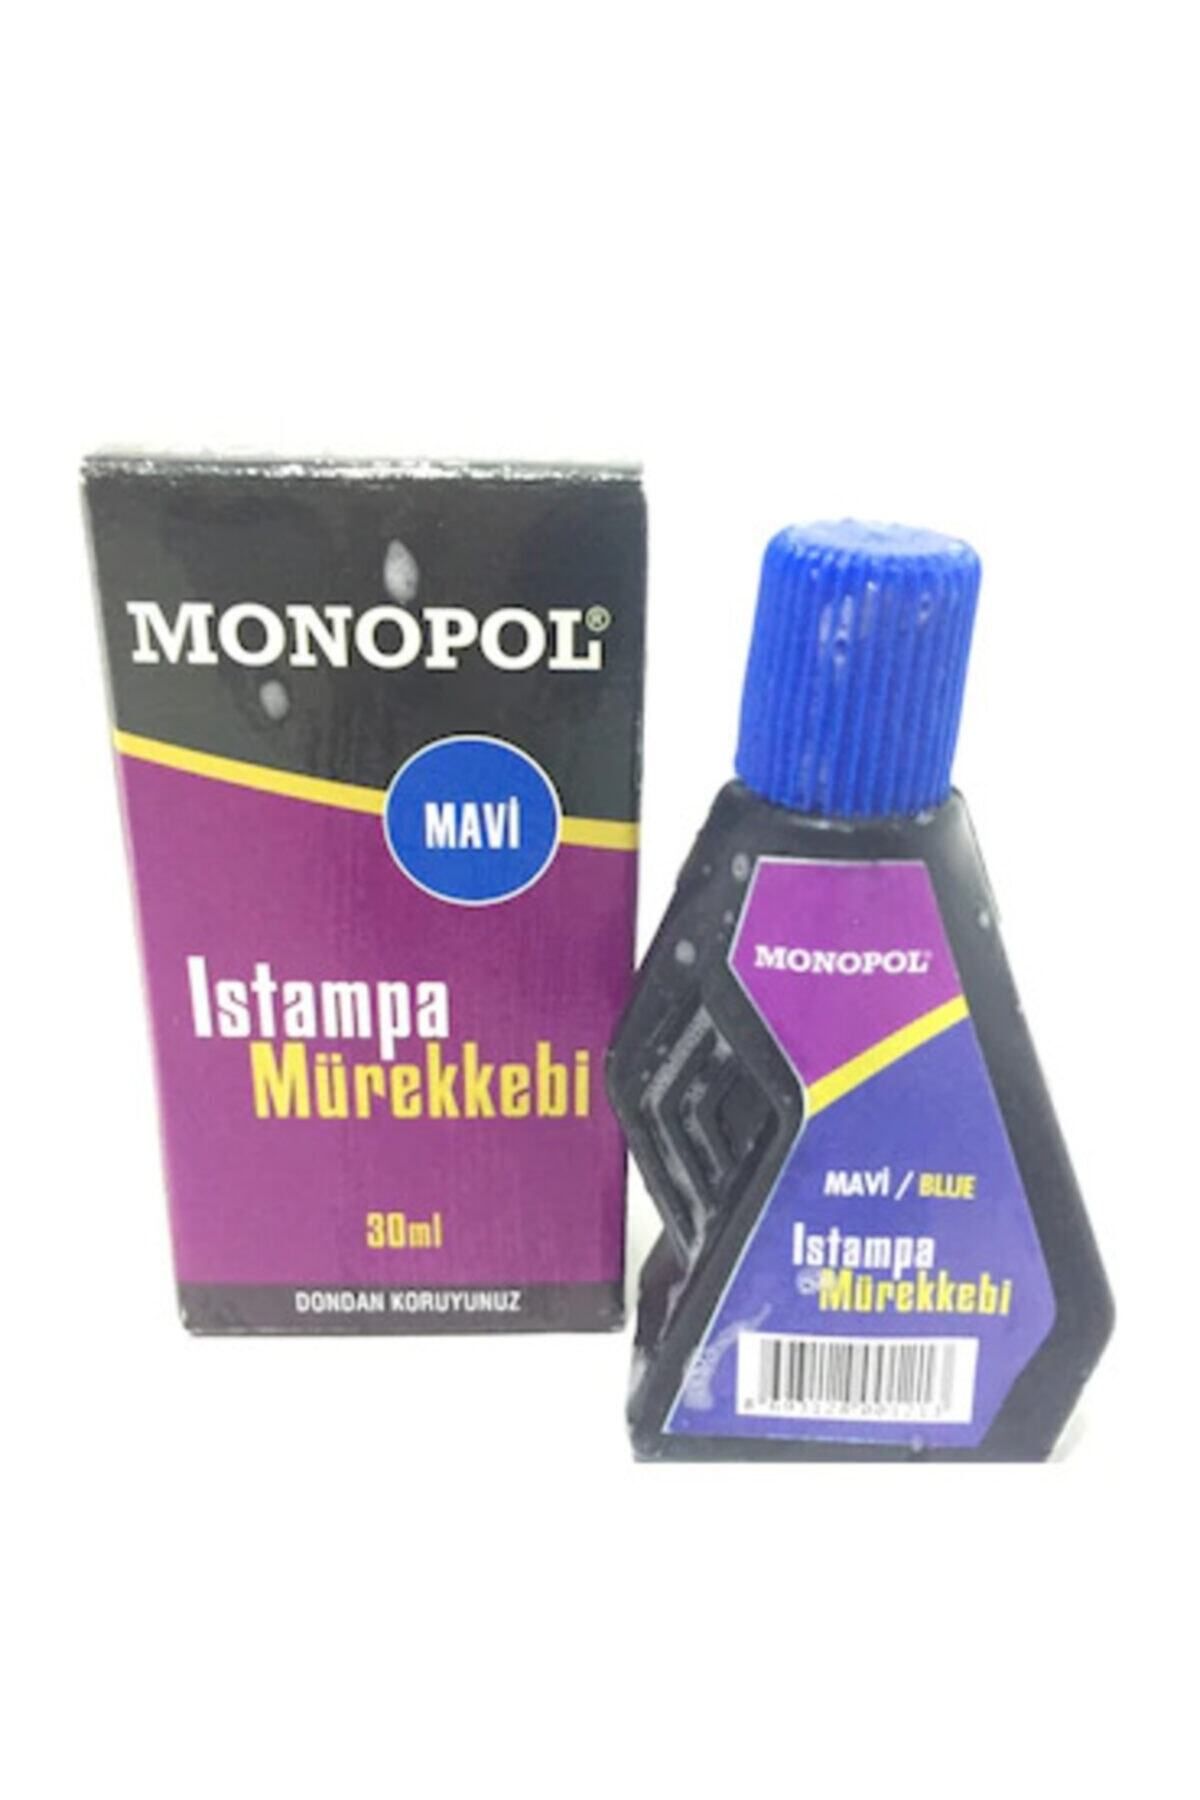 Monopol Mavi Kaşe Istampa Mürekkebi 30 ml